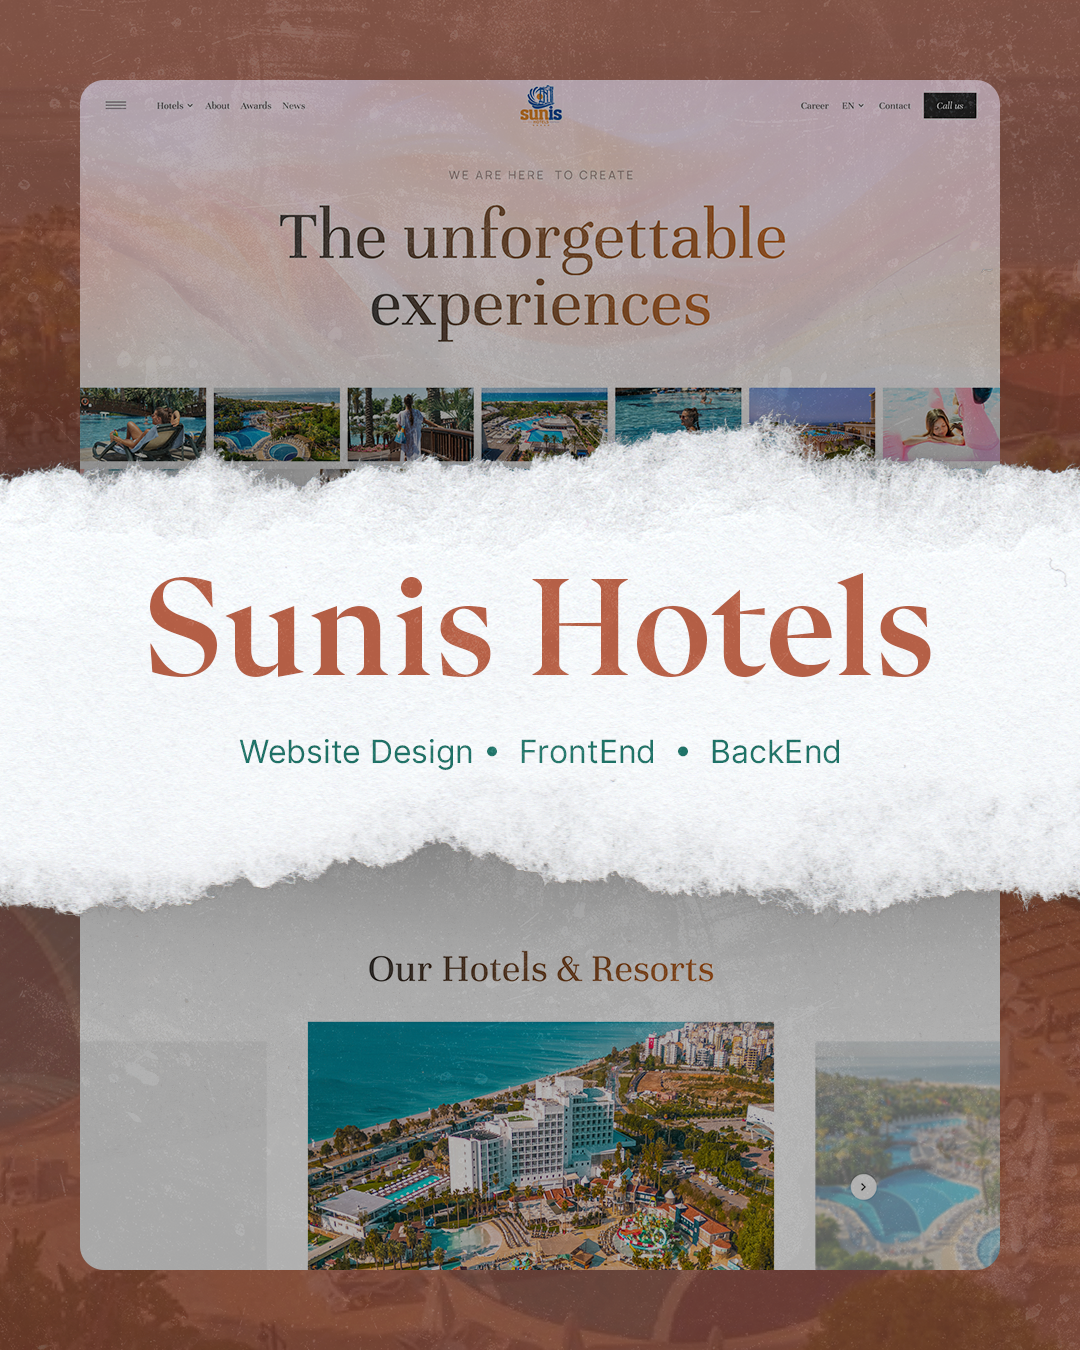 Sunis Hotels